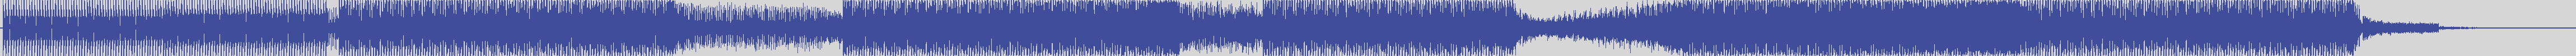 smilax_productions [SPMOL060] Stylus Robb, Mattias - Wow! [Karmin Shiff Rmx] audio wave form